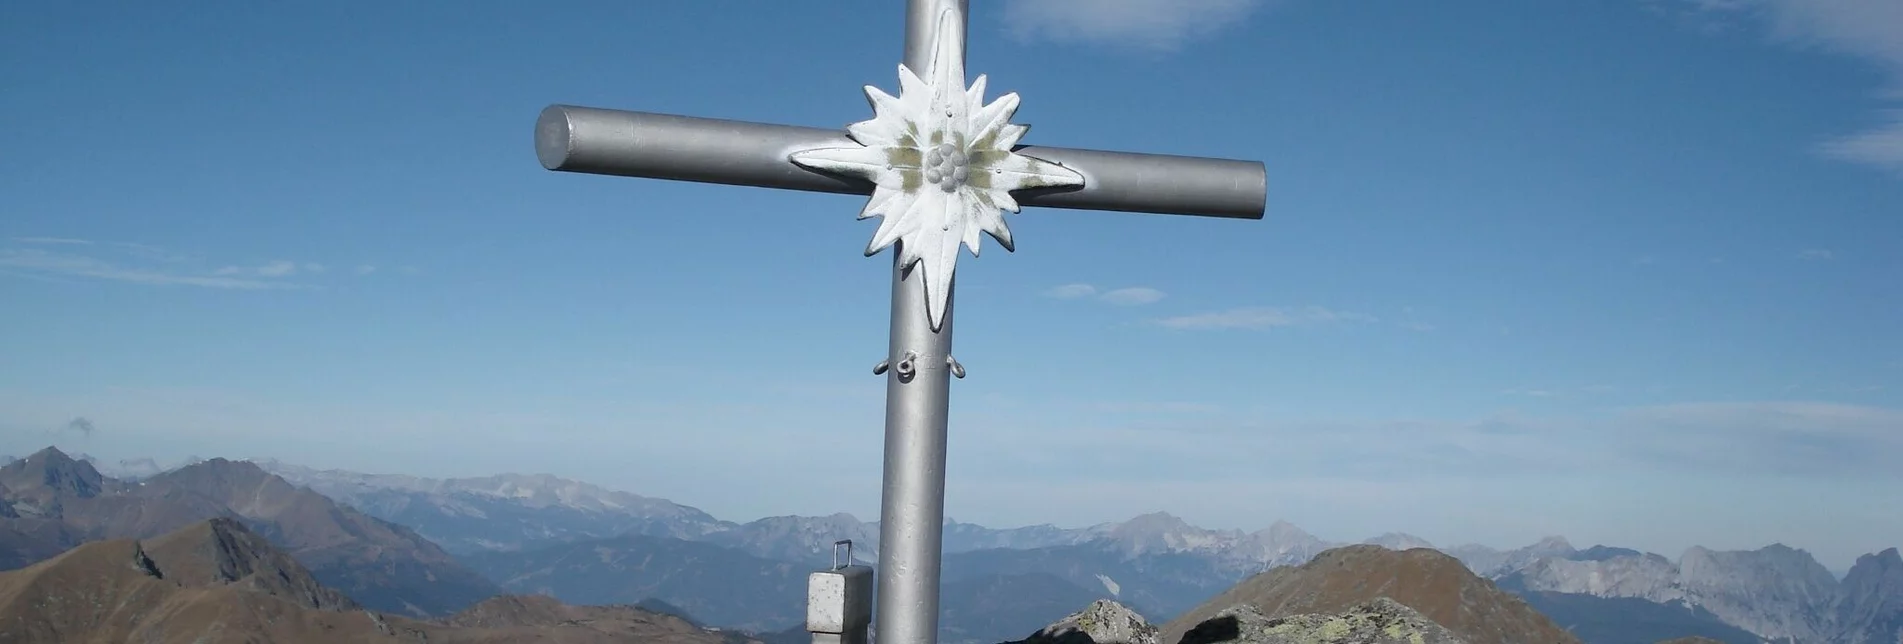 Mountain Hike Gamskögel west summit - Touren-Impression #1 | © Erlebnisregion Murtal